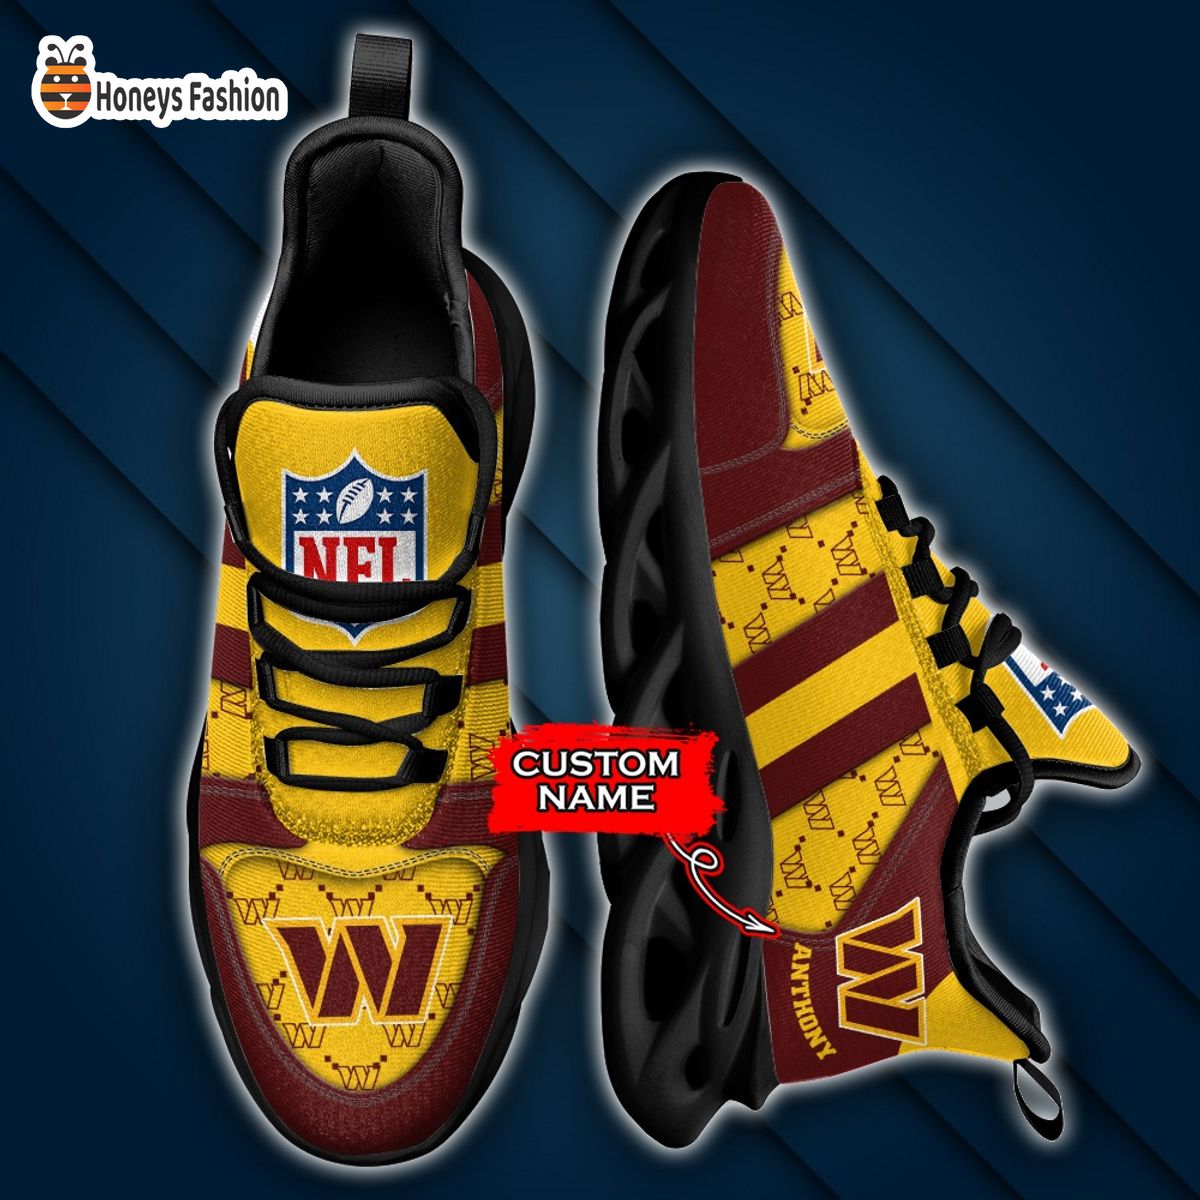 Washington Commanders NFL Gucci Personalized Max Soul Shoes